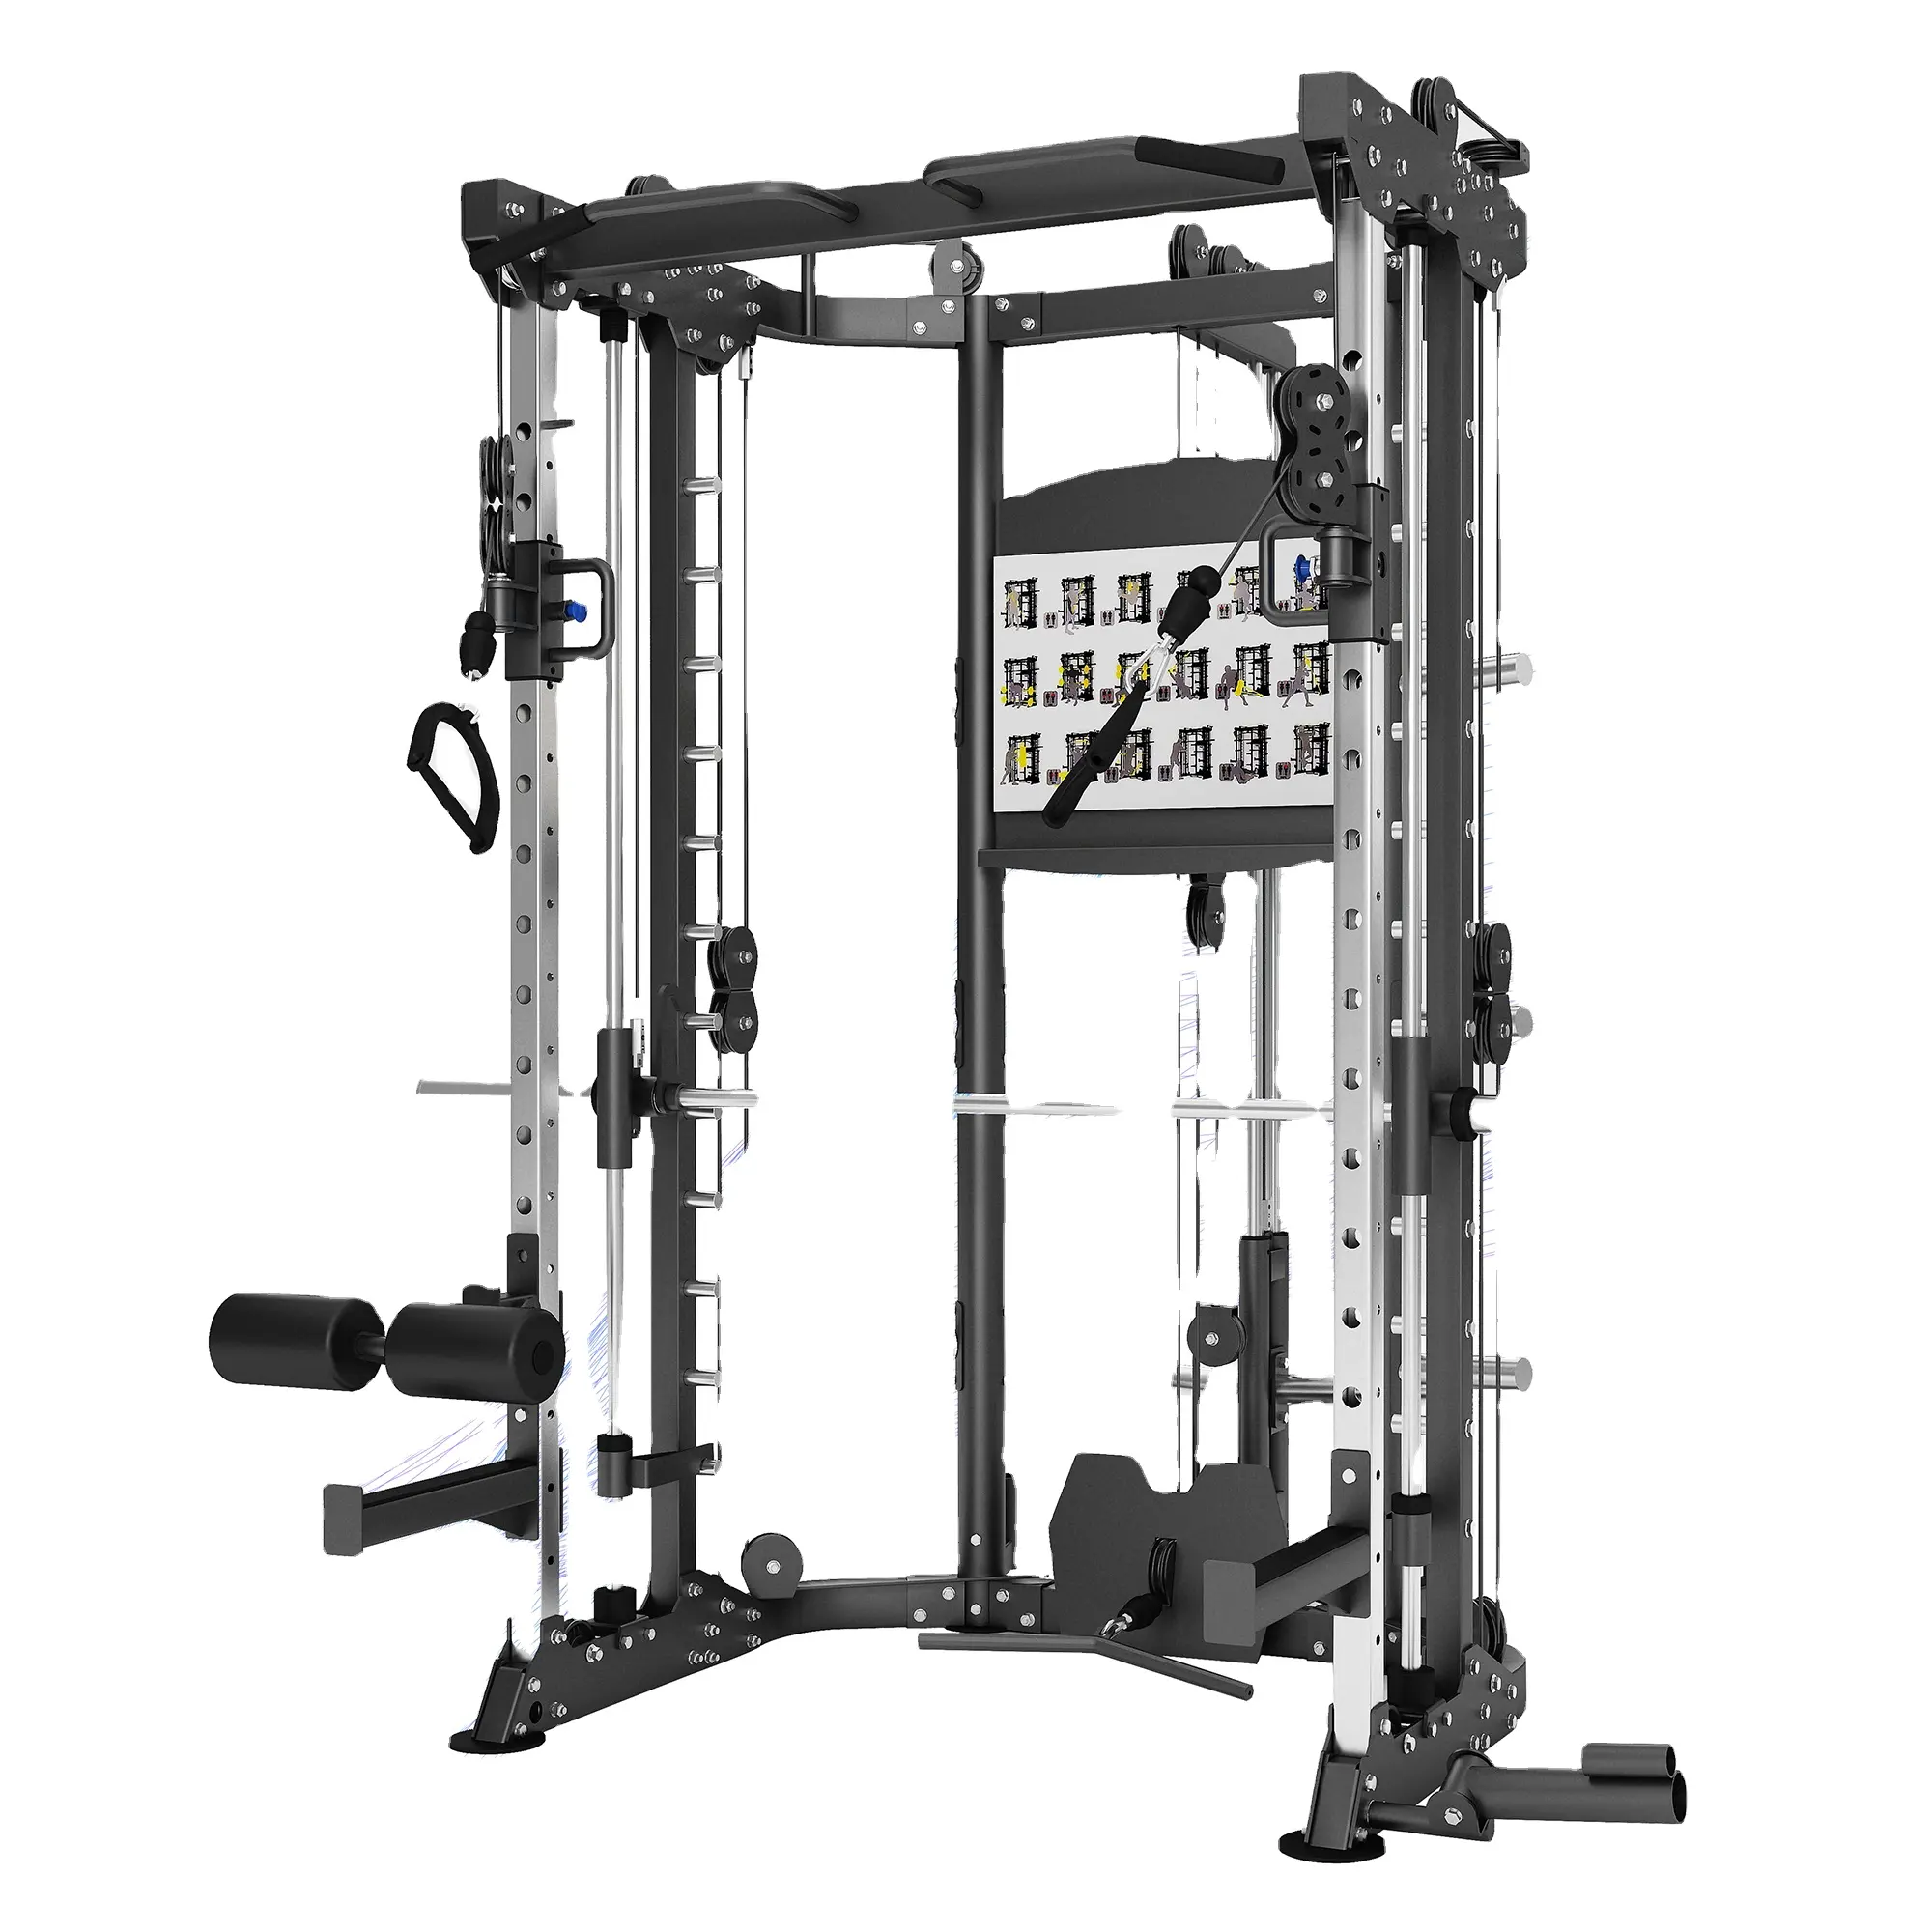 Populaire Producten Gym Smith Machine Fitness Apparatuur Muti Functionele Smith Machine Met Goede Service